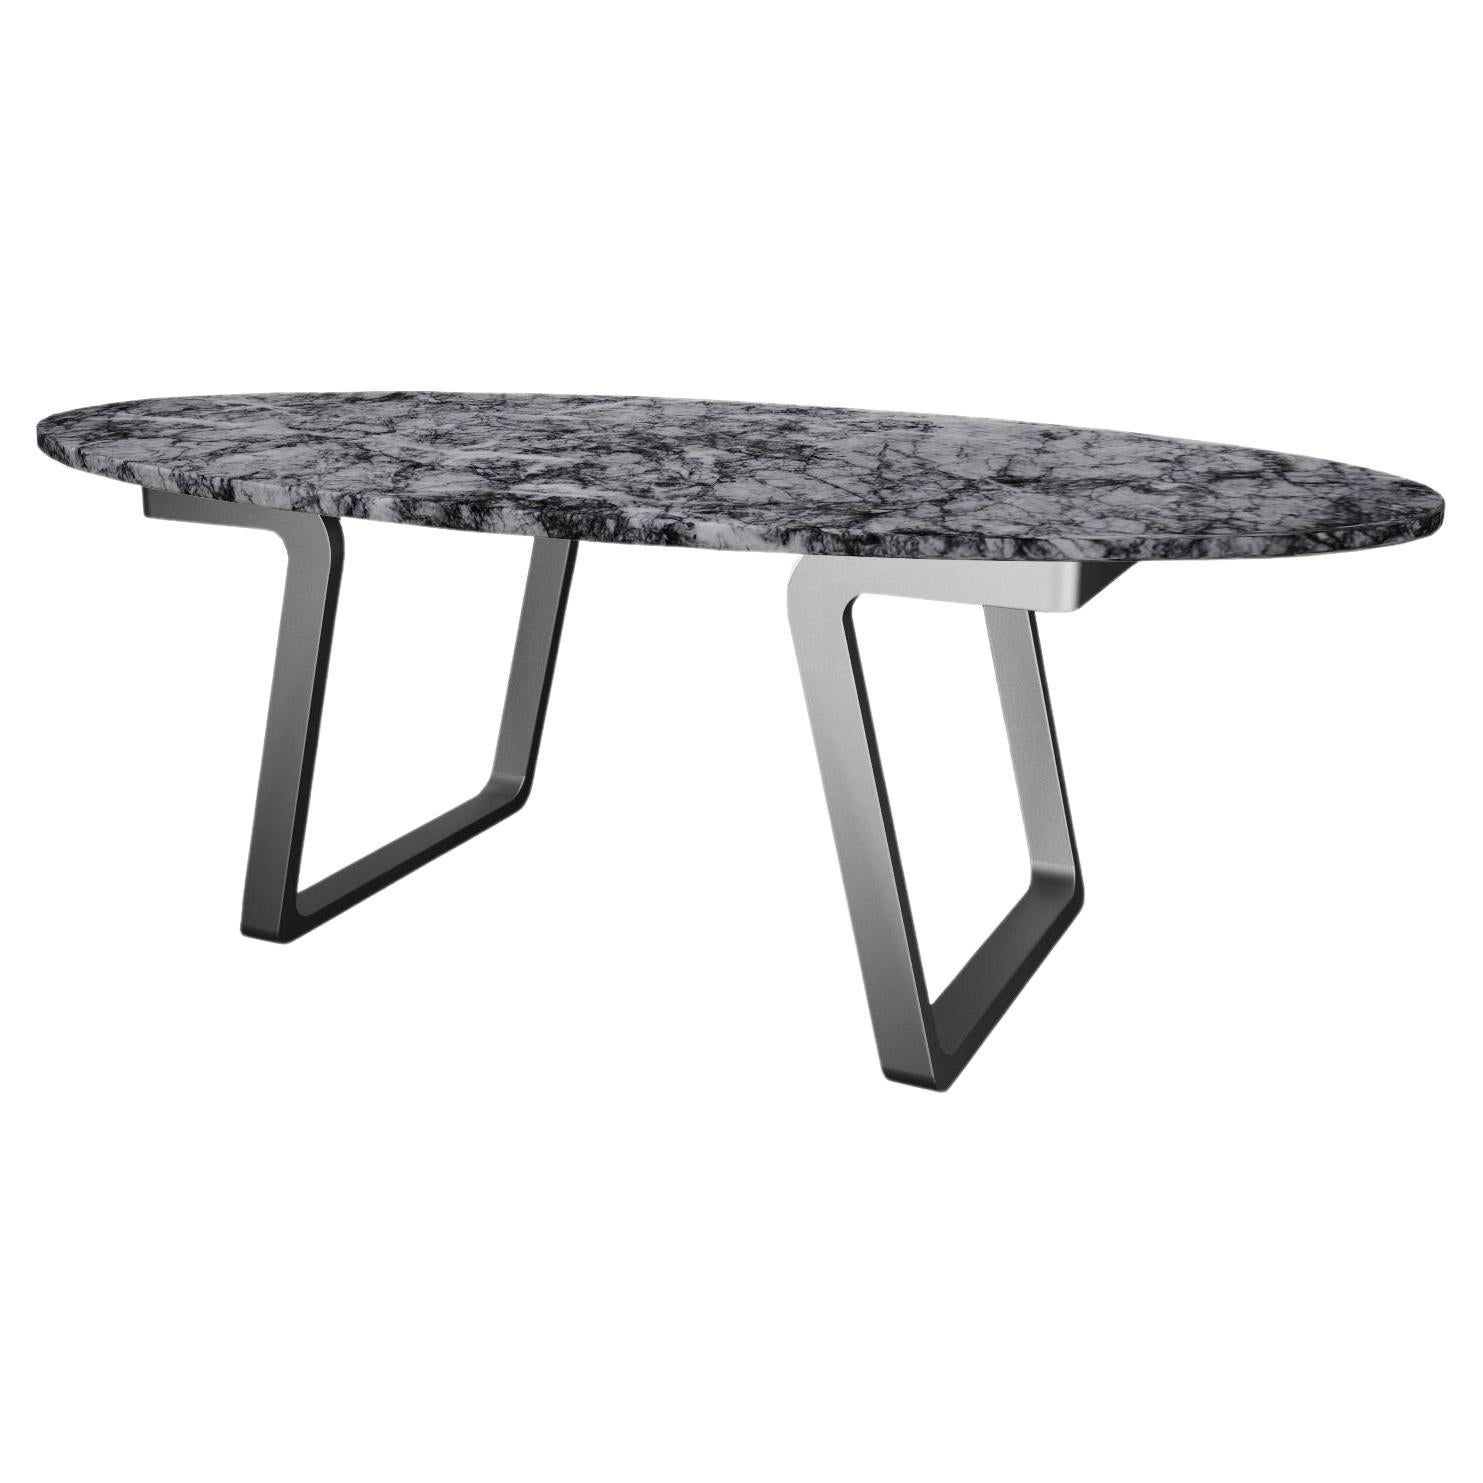 NORDST JERRY Coffee Table, Italian Grey Rain Marble, Danish Modern Design, New For Sale